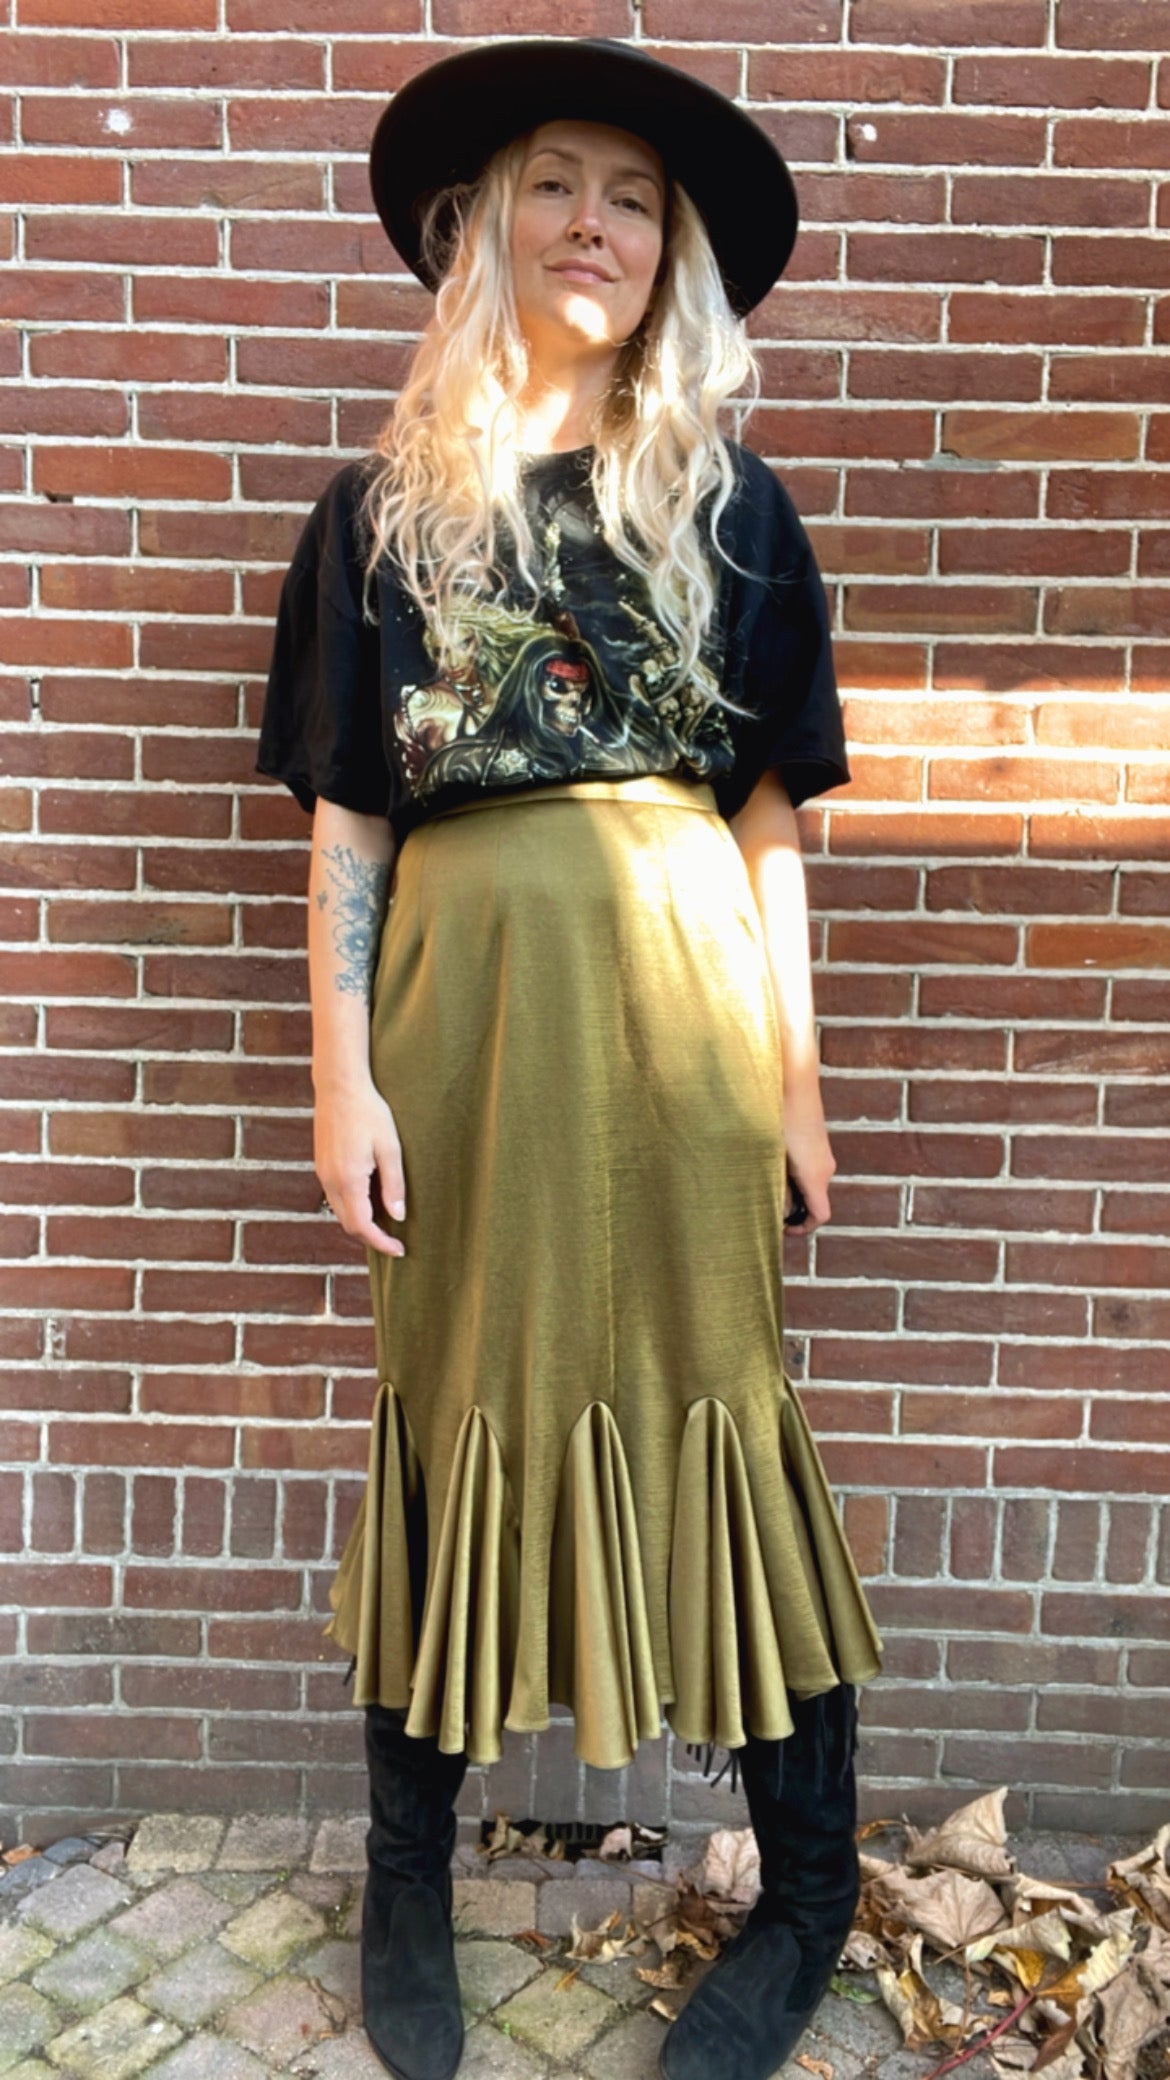 Golden couture skirt